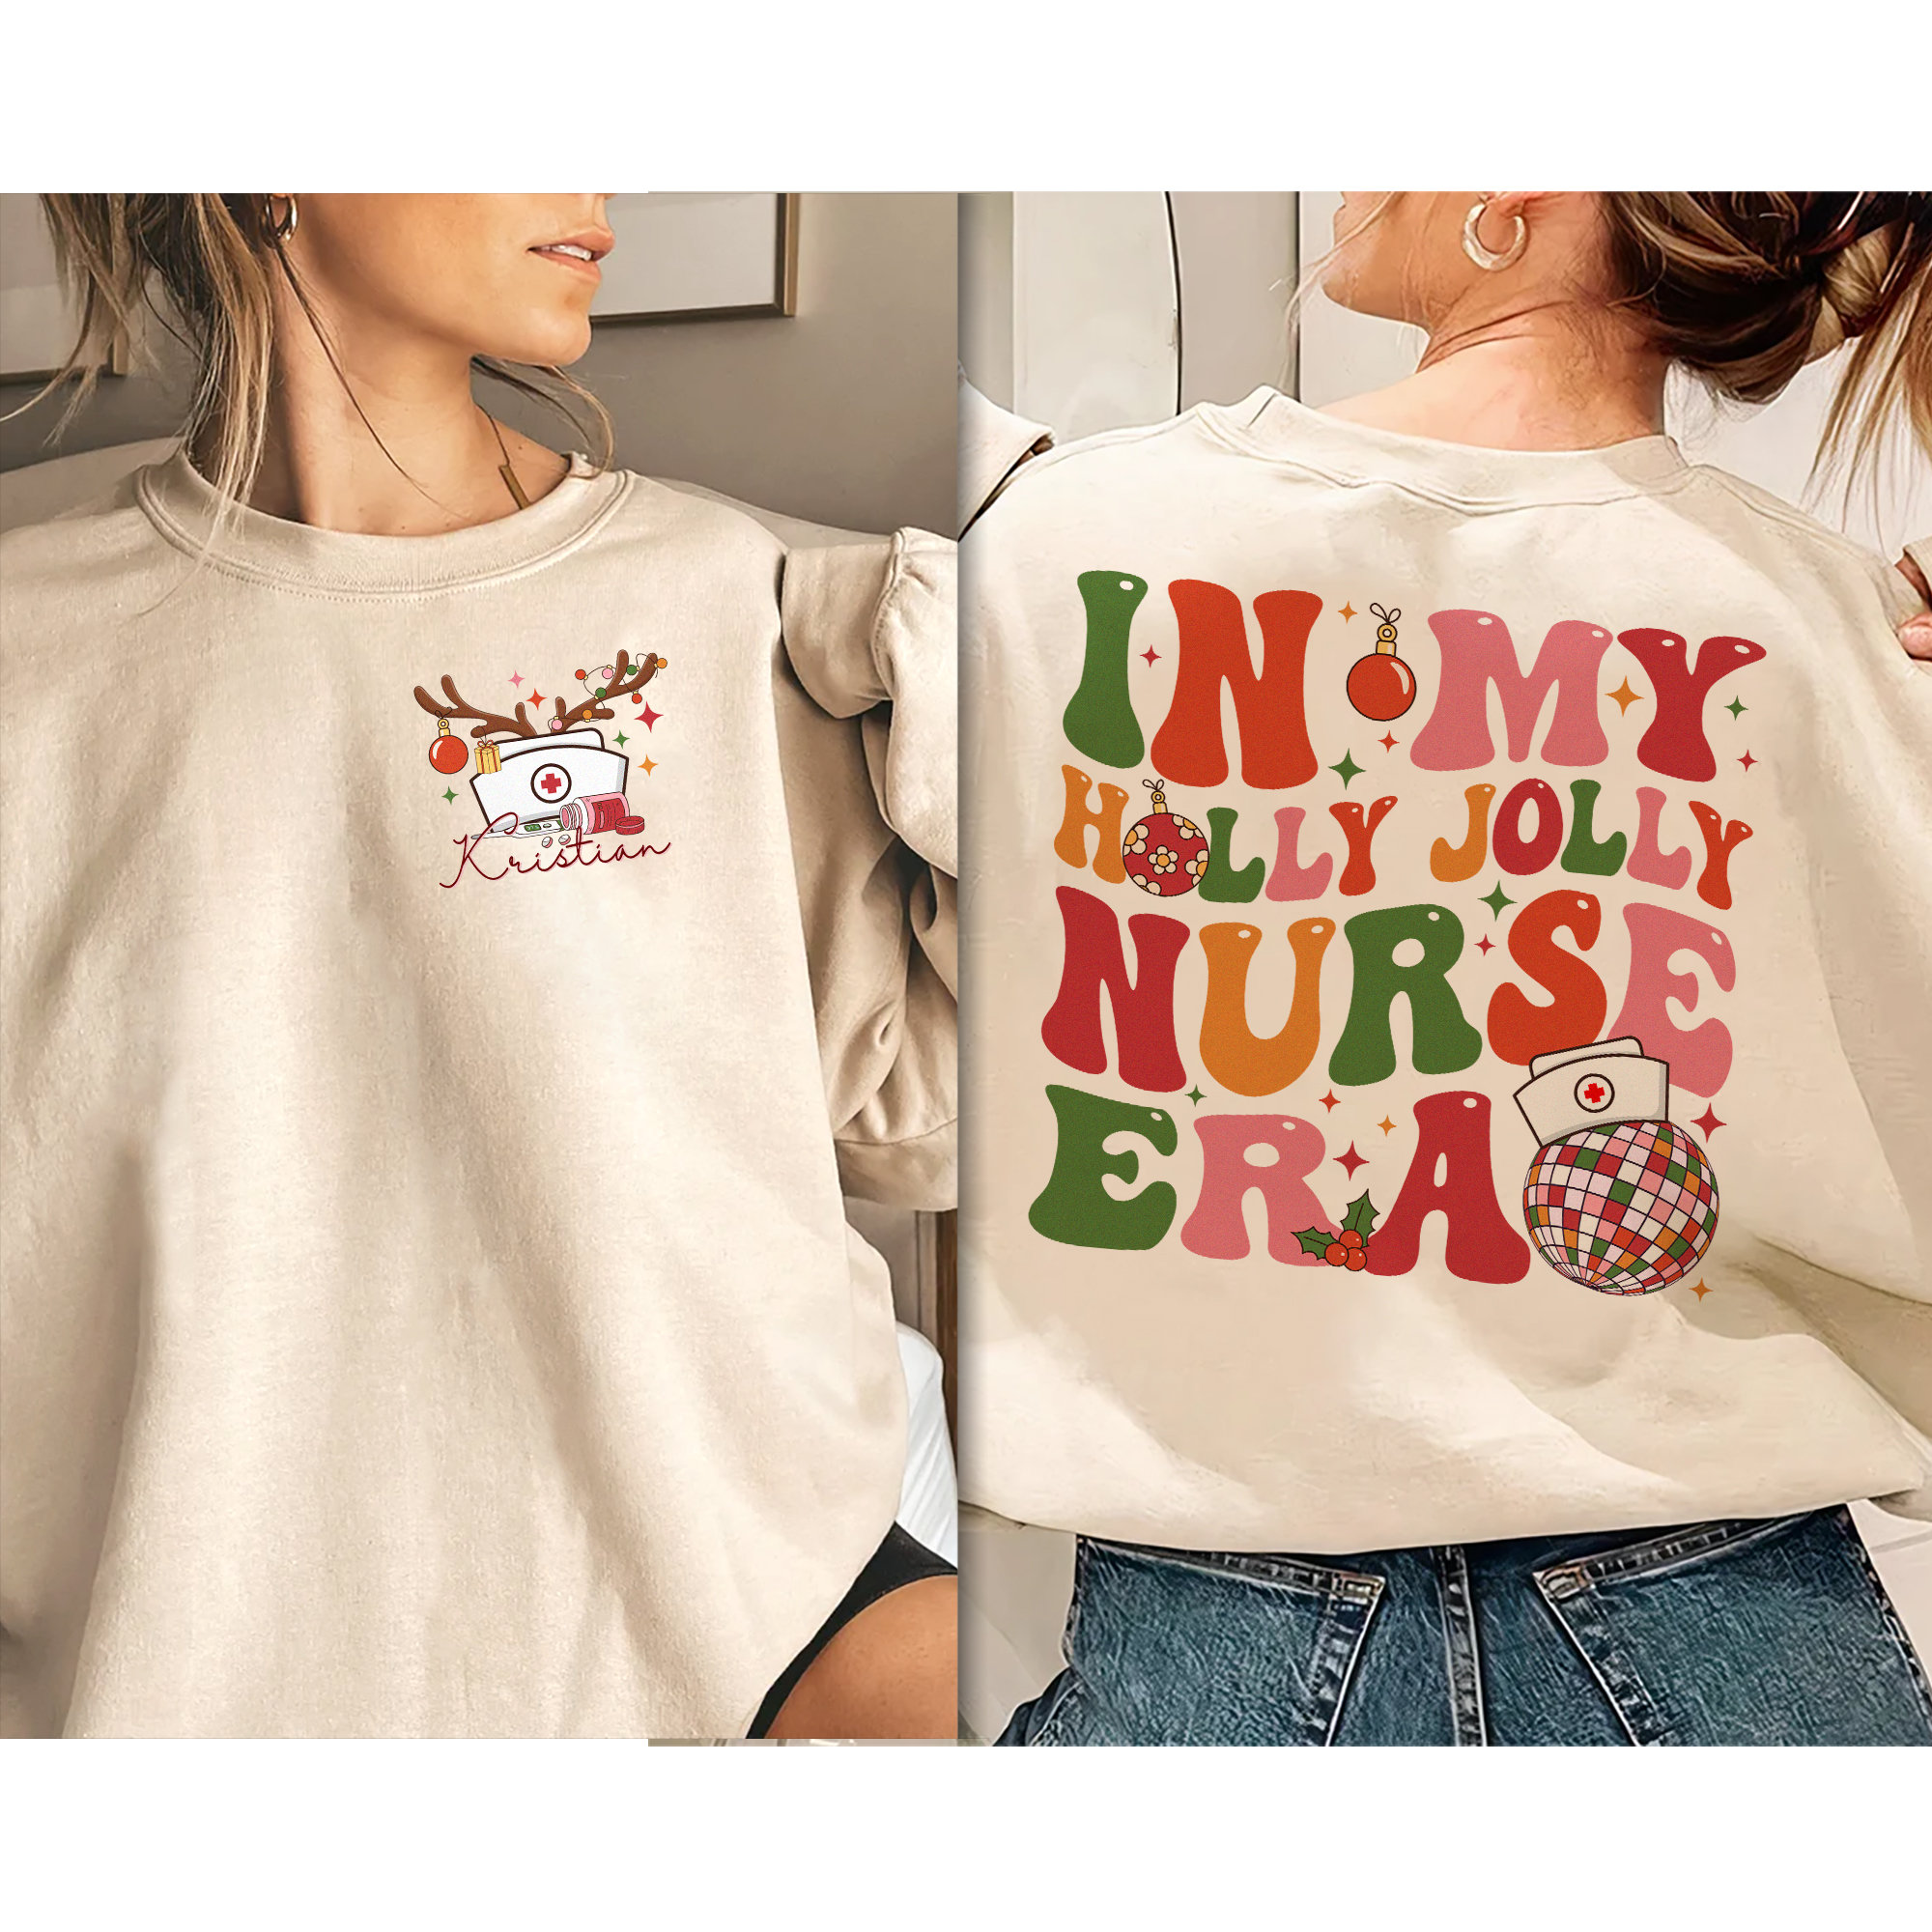 In Holly Jolly Nurse Era T-Shirt, Christmas Sweatshirt, Xmas Gift for Nurses, Festive Nurse Top